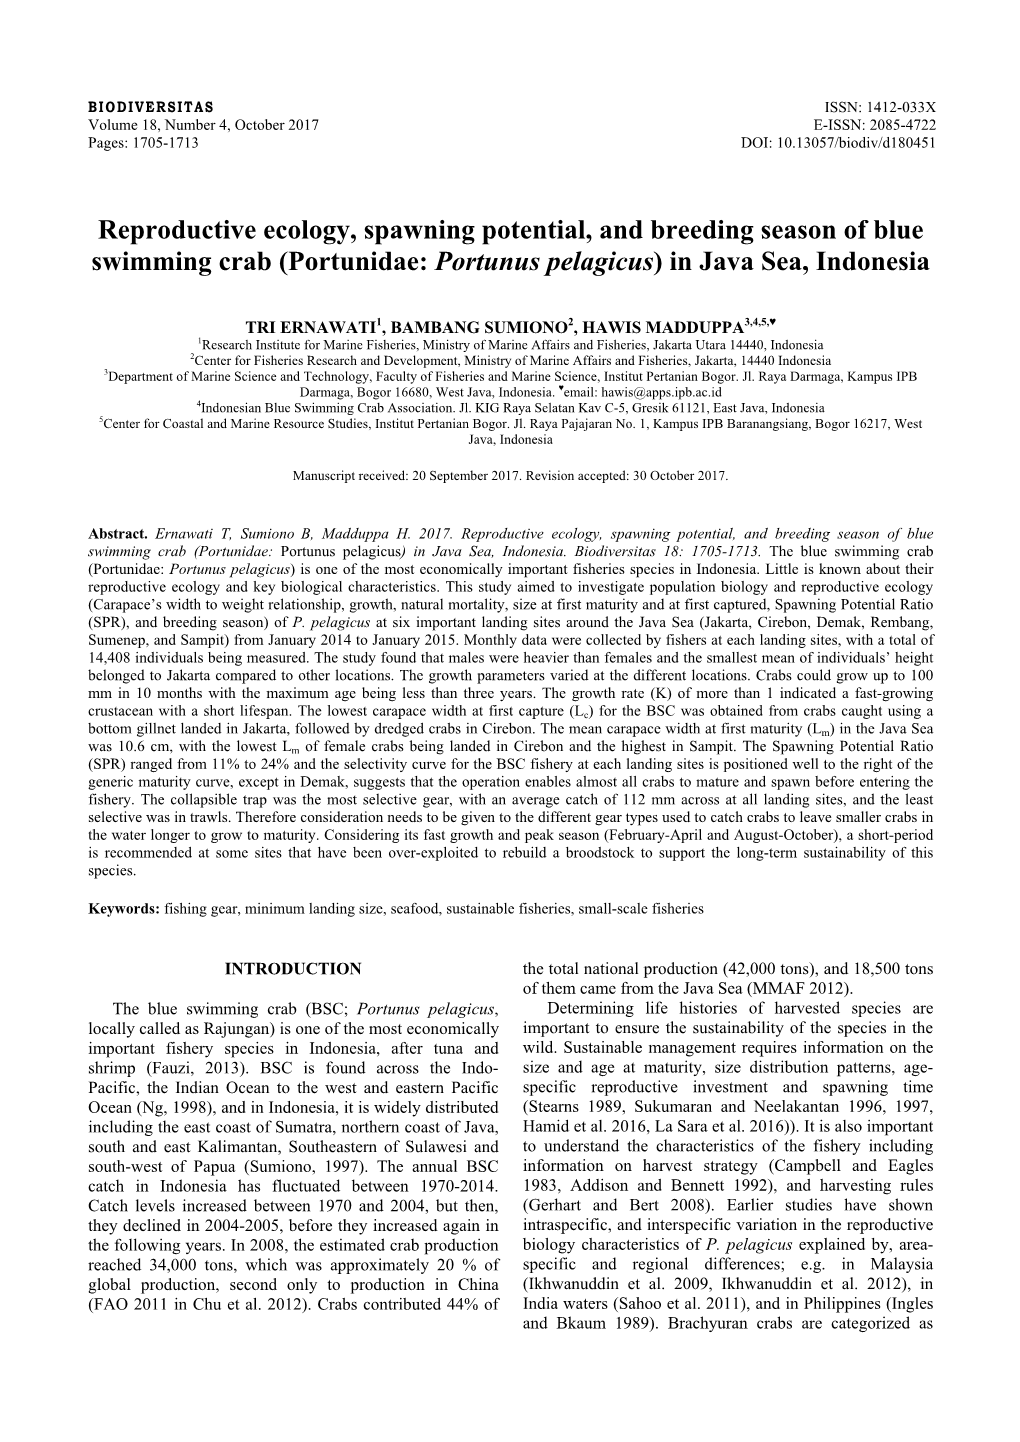 Reproductive Ecology, Spawning Potential, and Breeding Season of Blue Swimming Crab (Portunidae: Portunus Pelagicus) in Java Sea, Indonesia